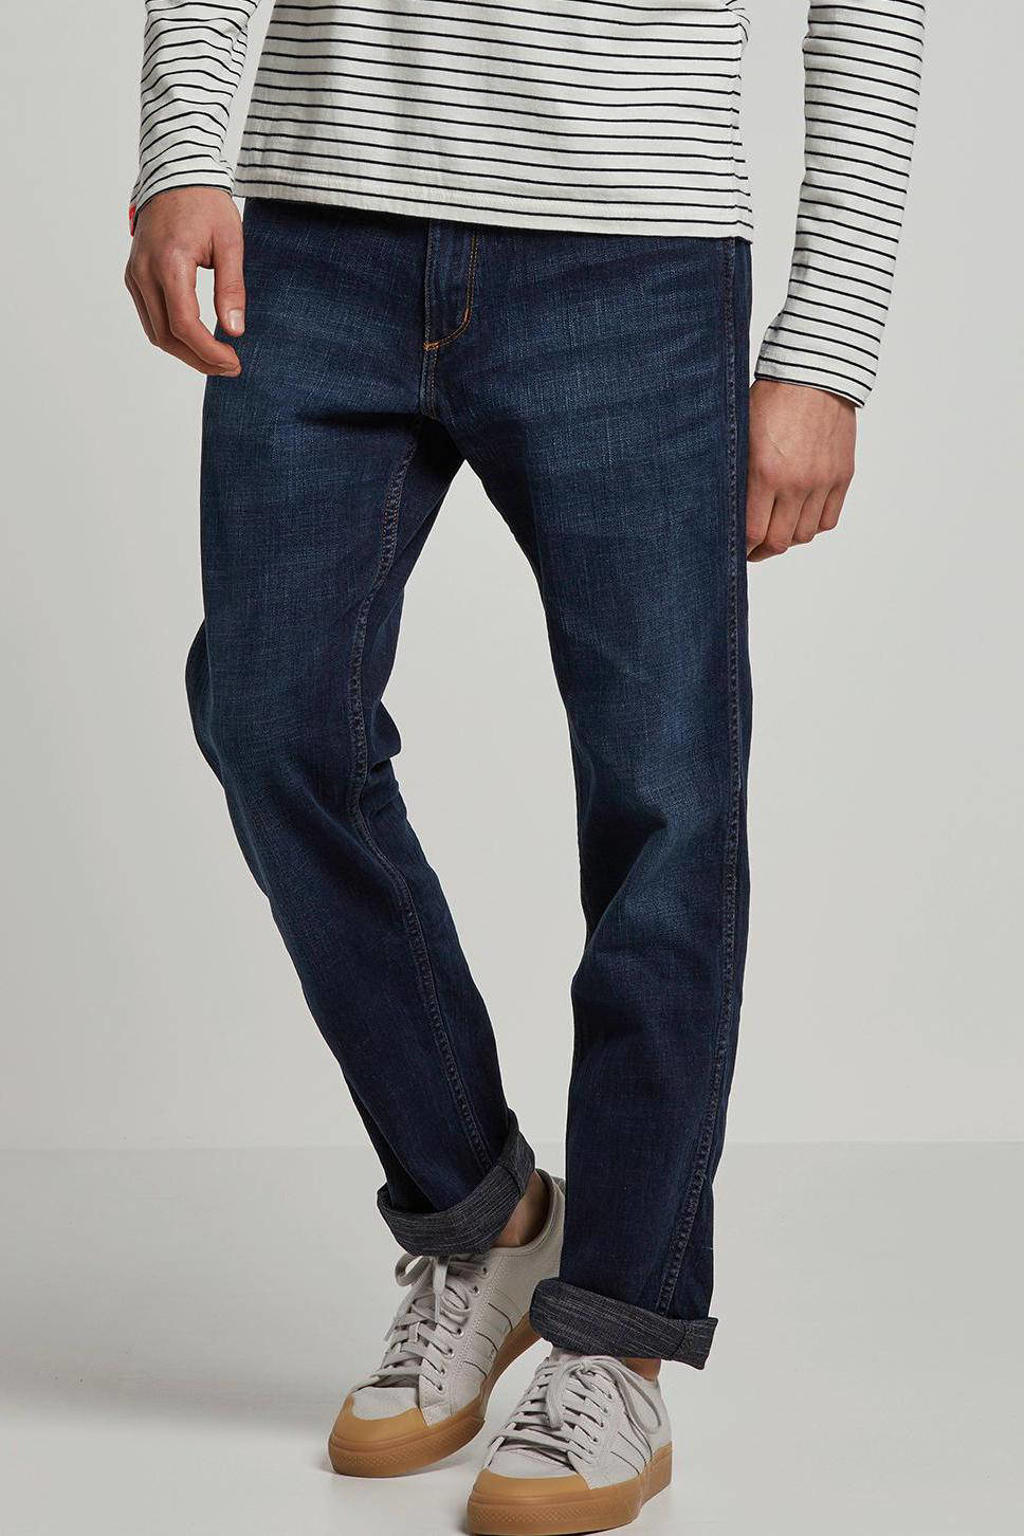 Wrangler straight fit jeans Greensboro el camino